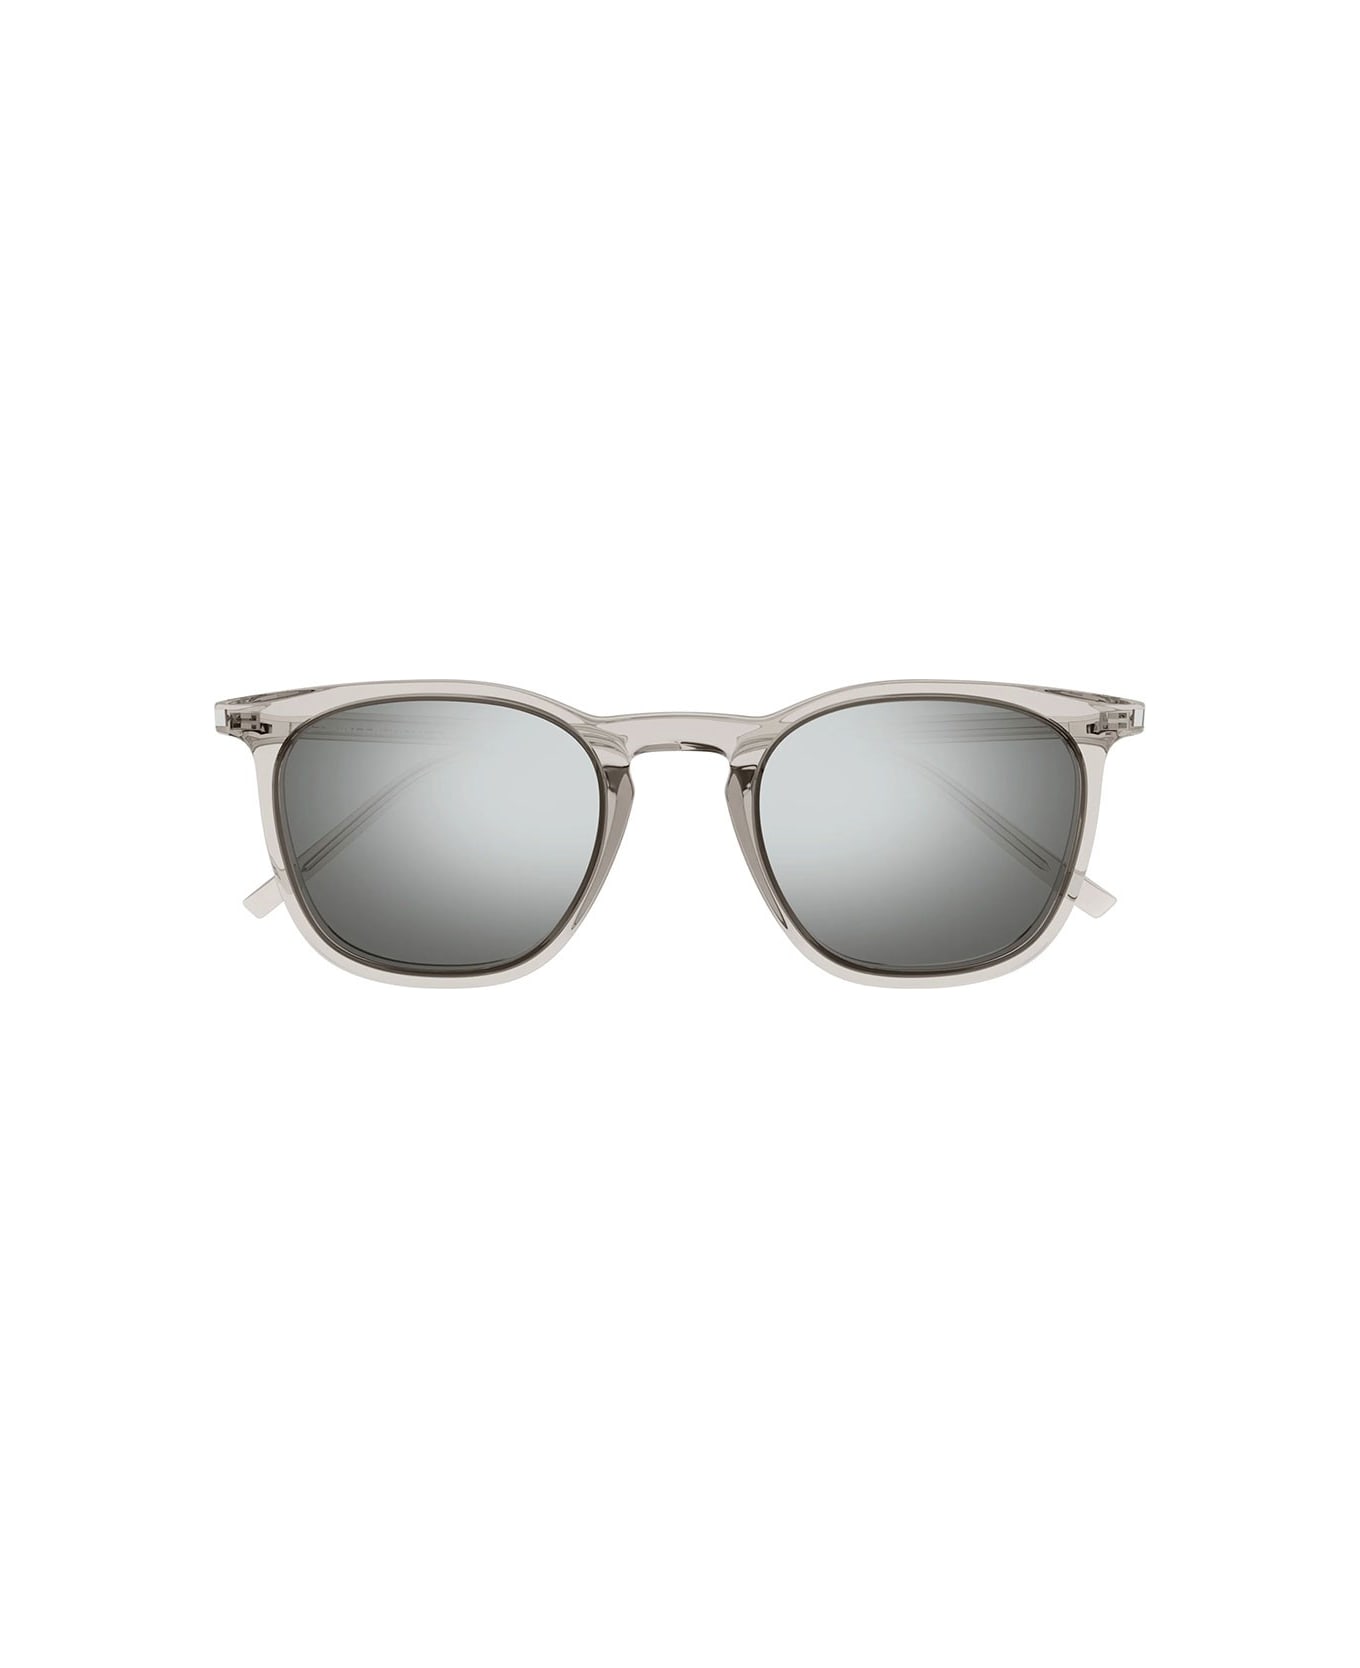 Saint Laurent Eyewear Sunglasses - Beige/Grigio